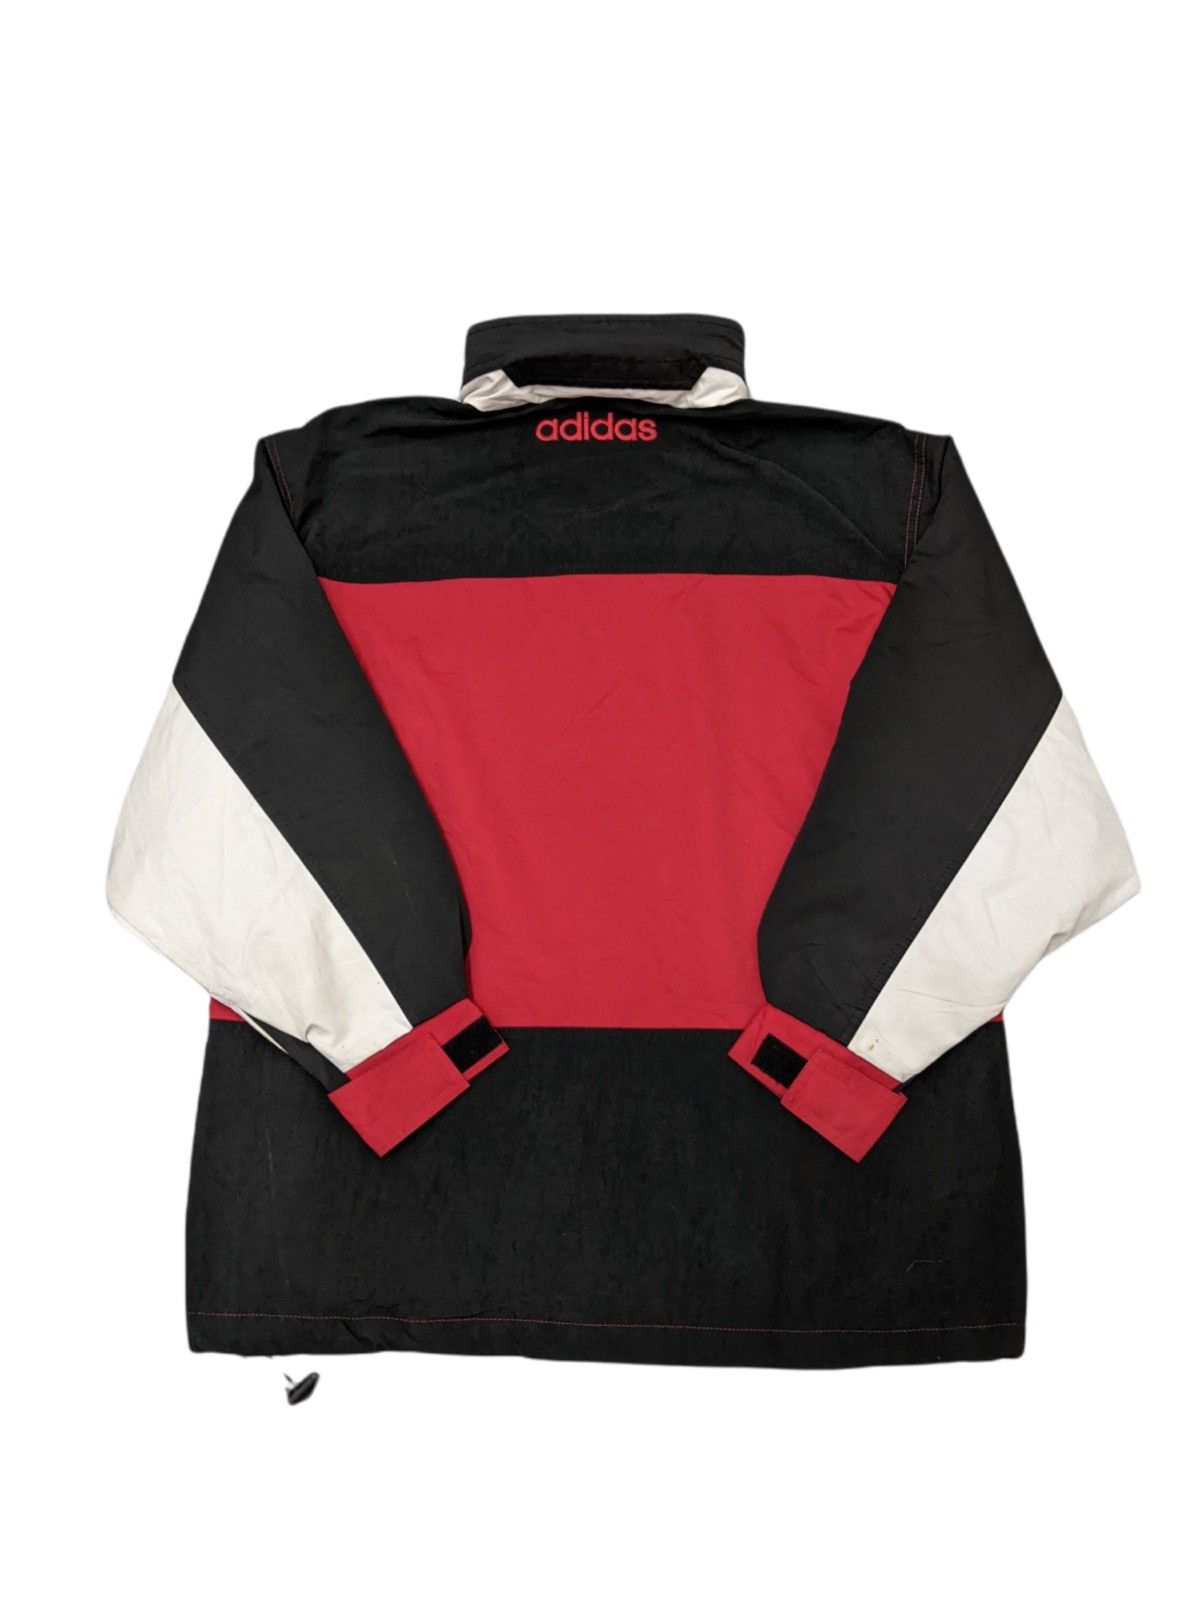 Adidas Vtg 90s Adidas Stripe Hooded Jacket Size US M / EU 48-50 / 2 - 3 Thumbnail